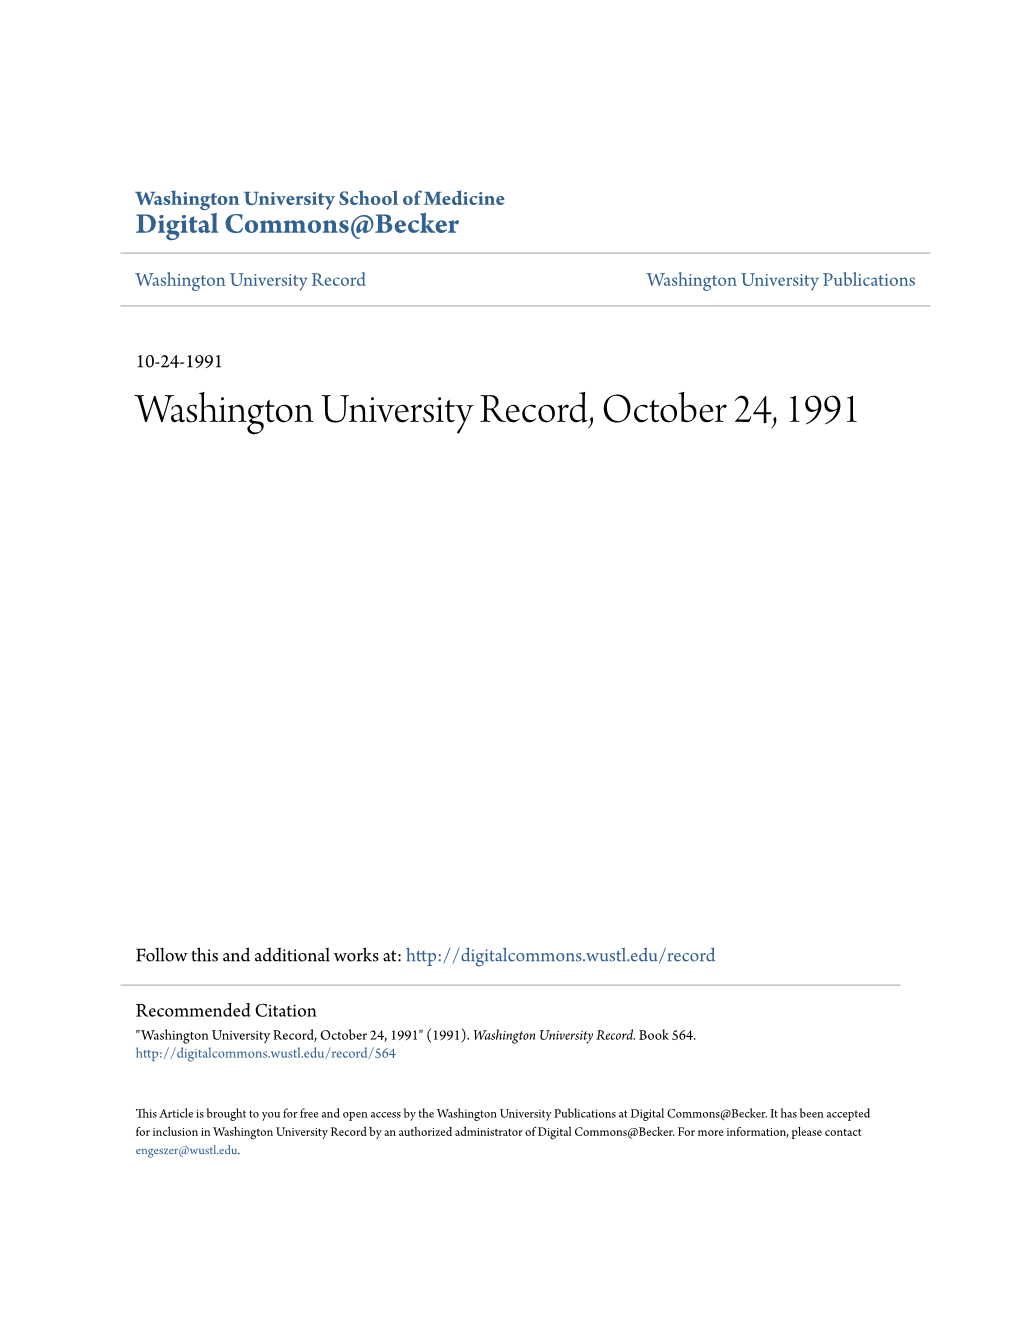 Washington University Record, October 24, 1991